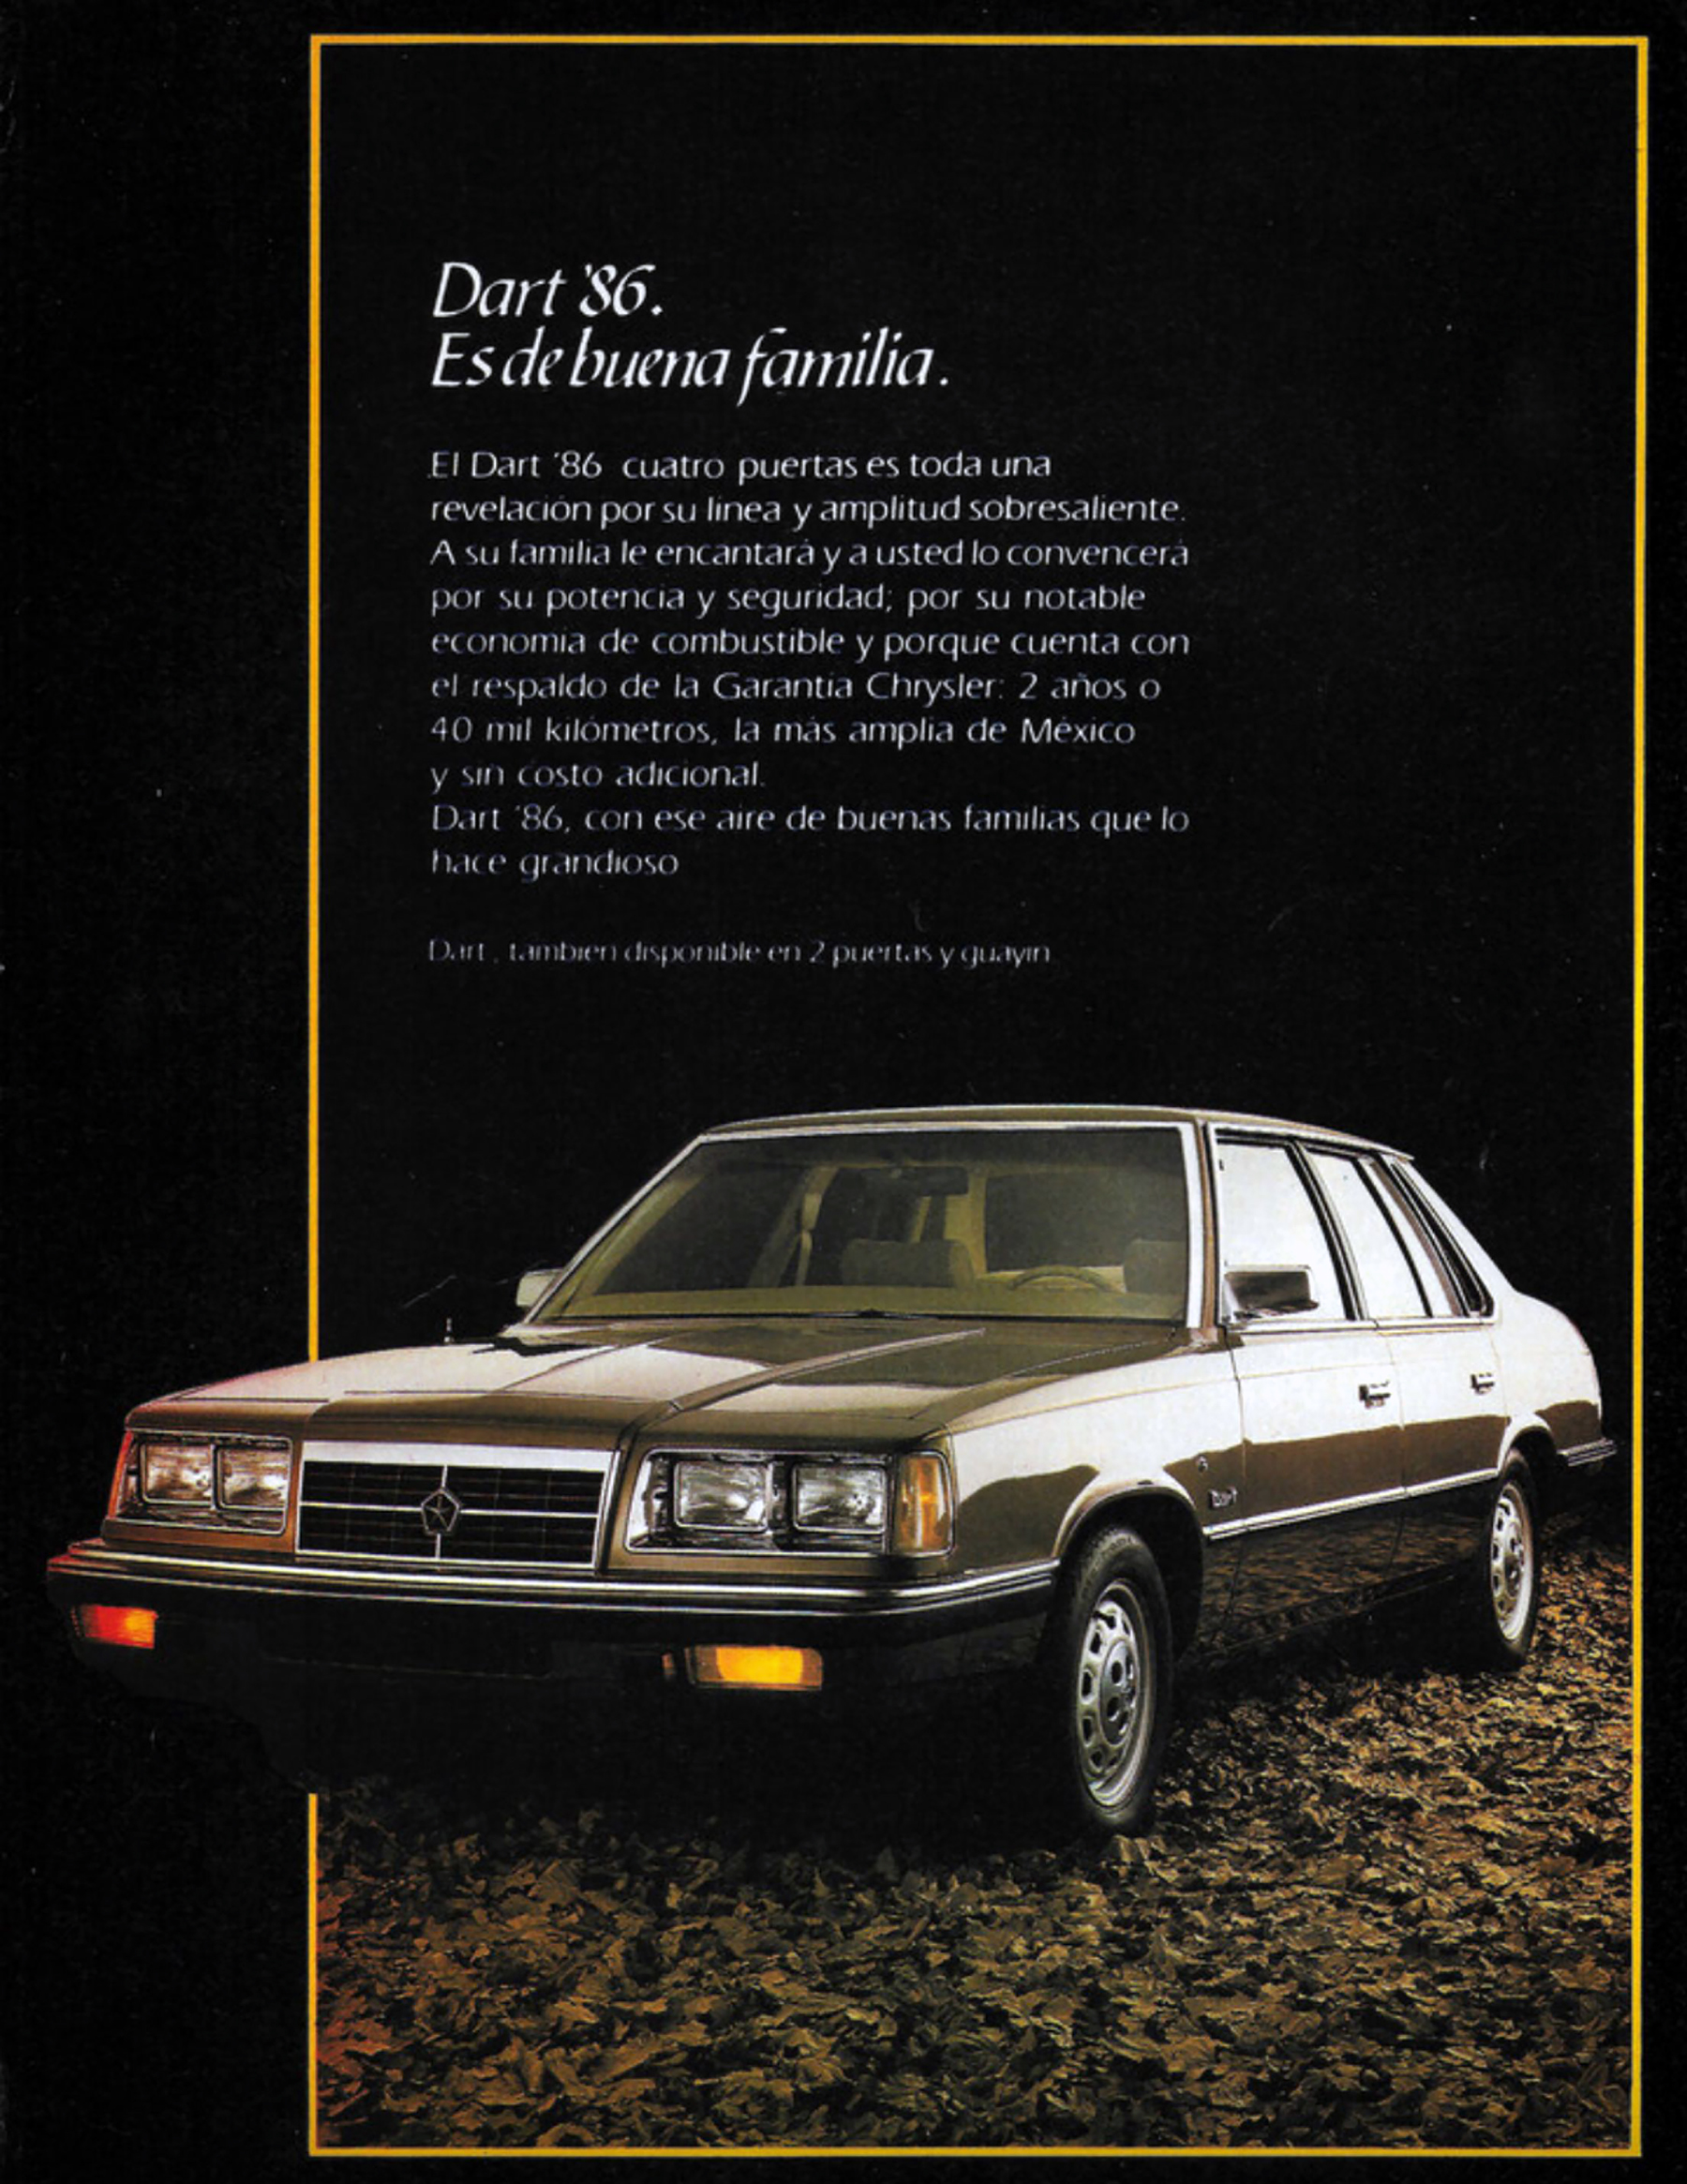 1986 Dodge Dart Ad (Mexico)